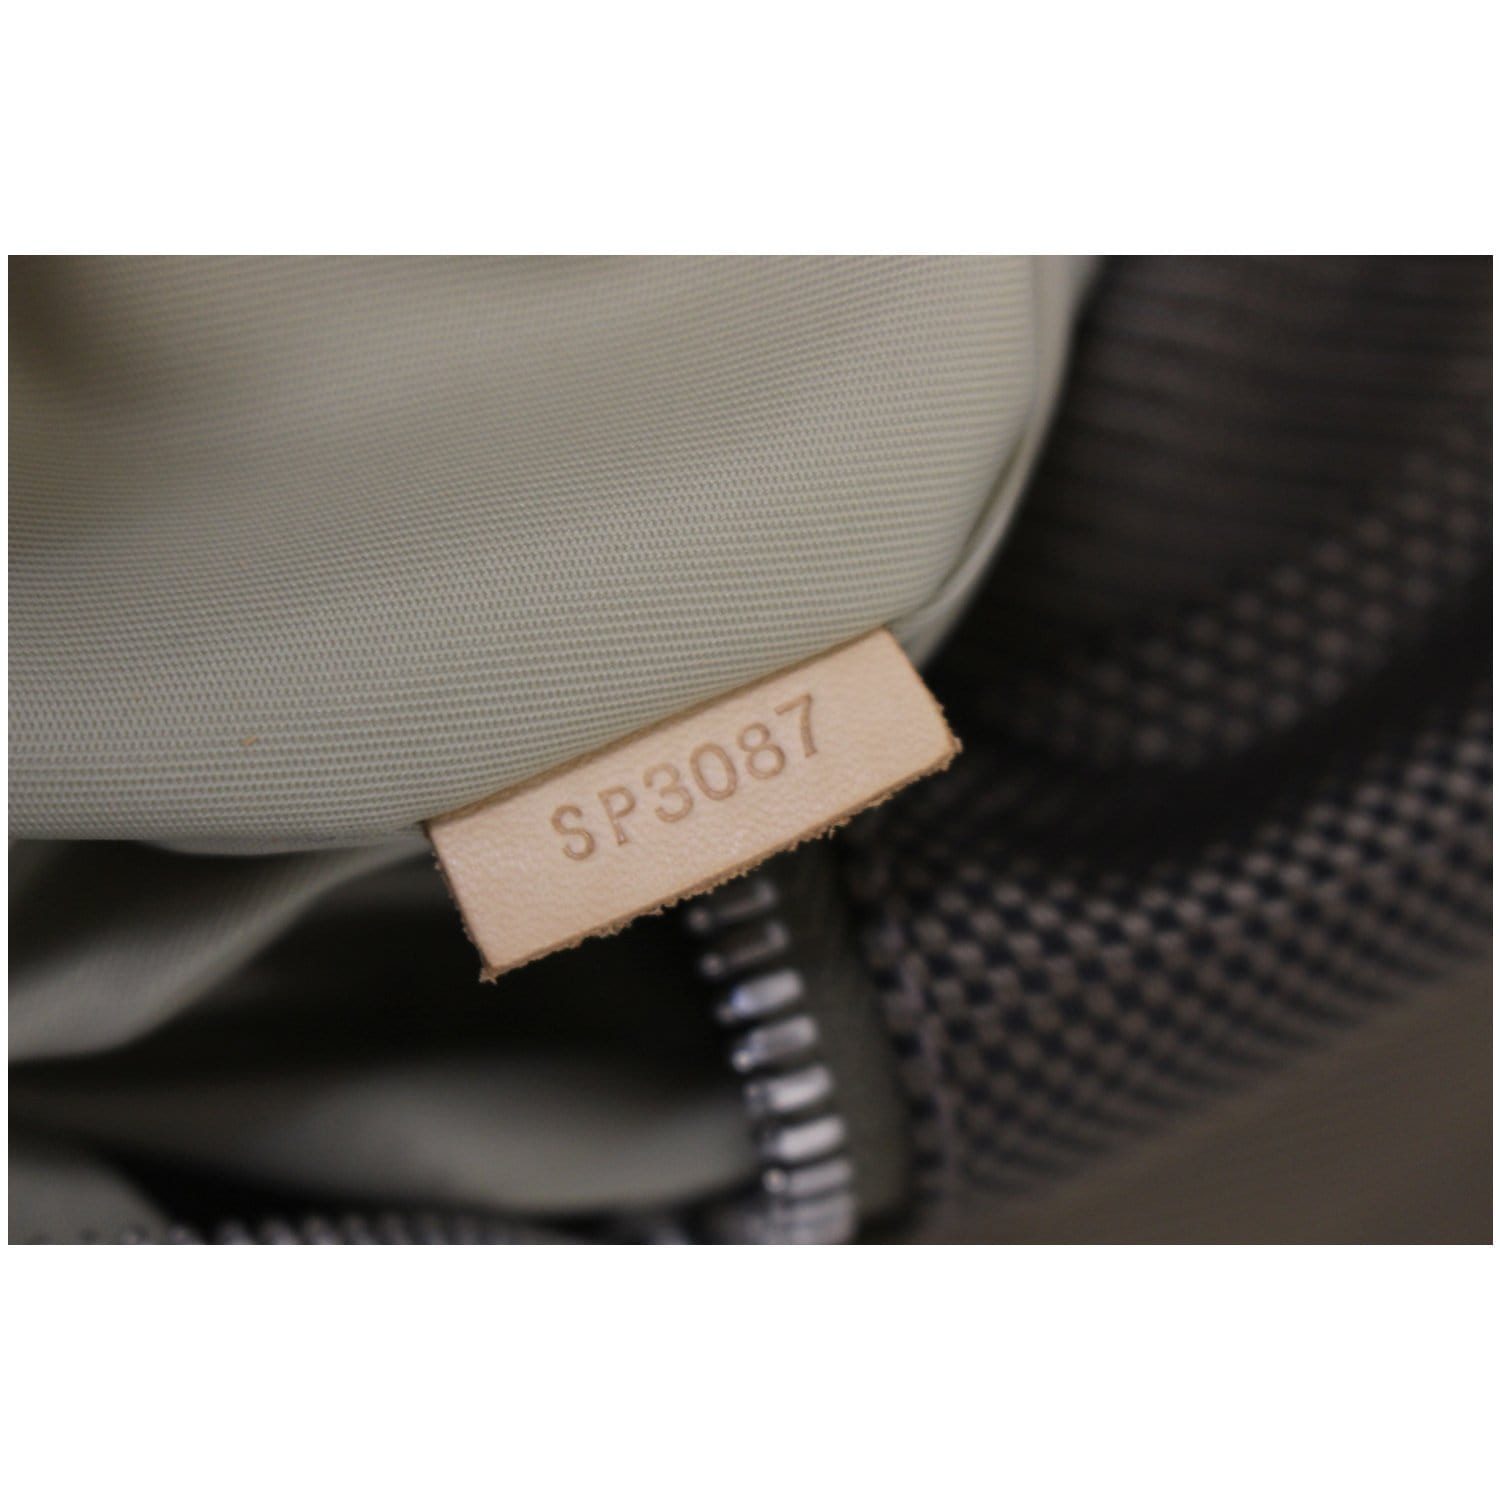 Louis Vuitton Attaquant Travel bag 373919